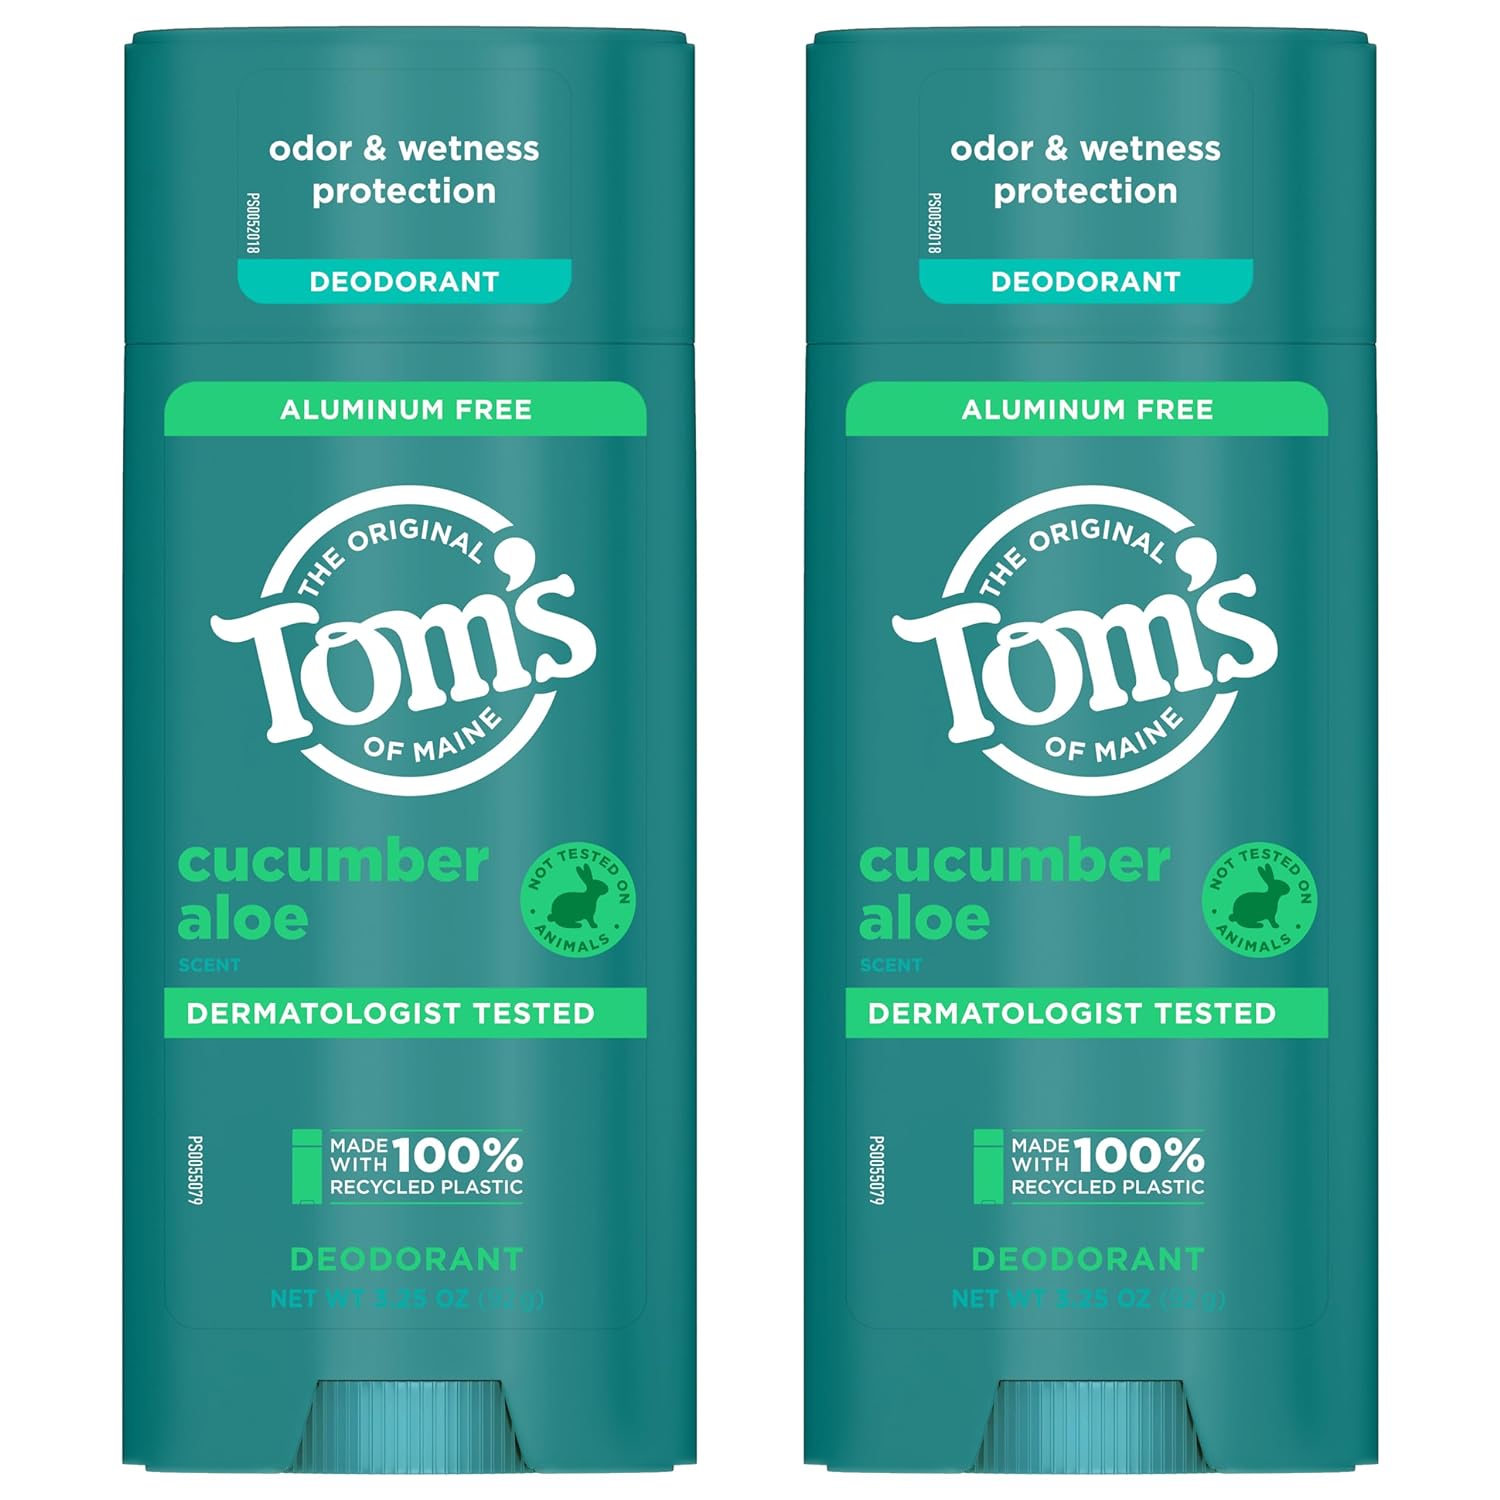 Tom’s of Maine Cucumber Aloe Natural Deodorant for Women and Men, Aluminum Free, 3.25 oz, 2-Pack